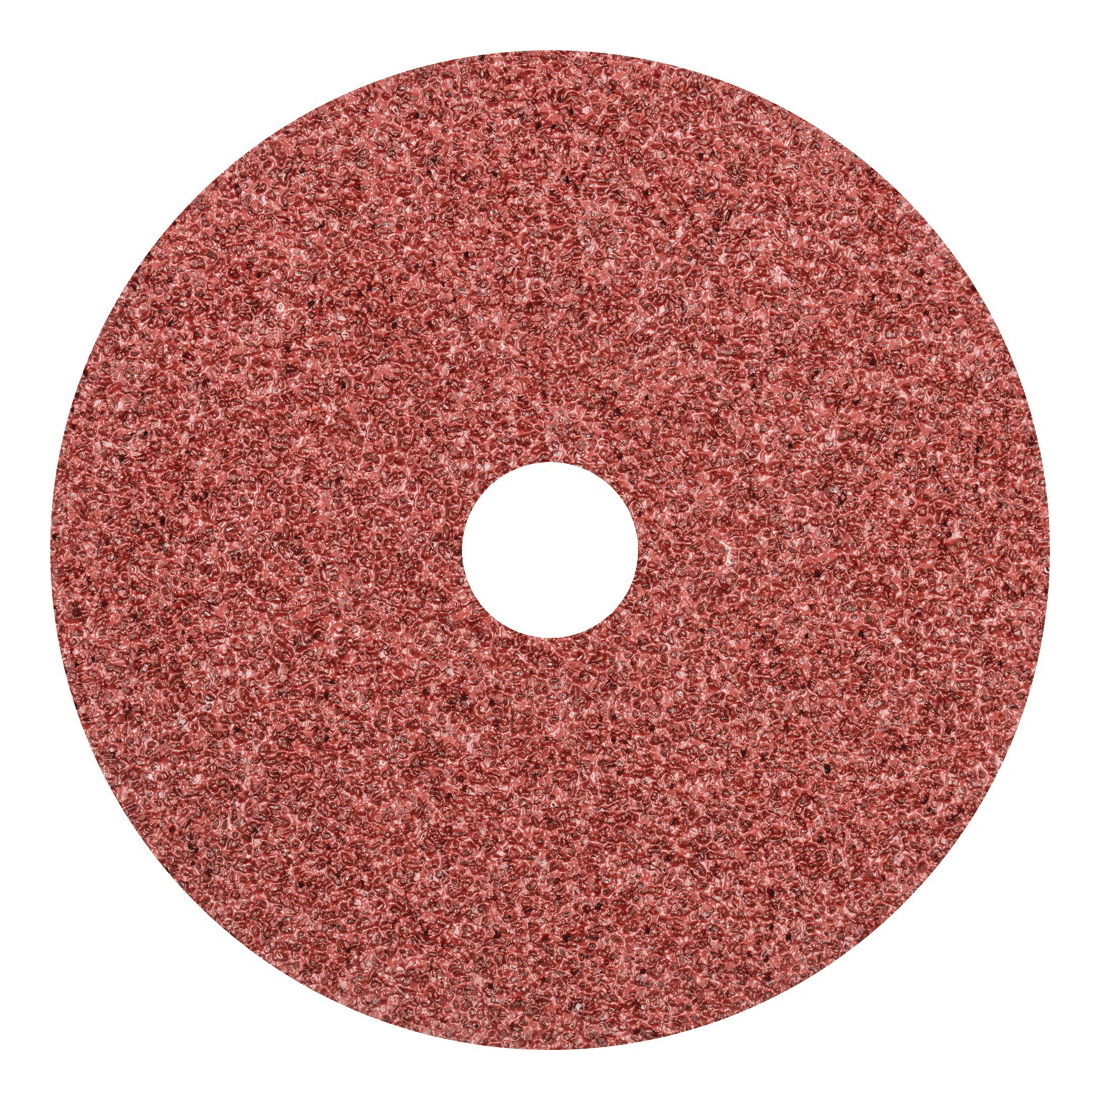 PFERD 62502 Standard Coated Abrasive Disc, 5 in Dia, 7/8 in Center Hole, 24 Grit, Aluminum Oxide Abrasive, Arbor Attachment